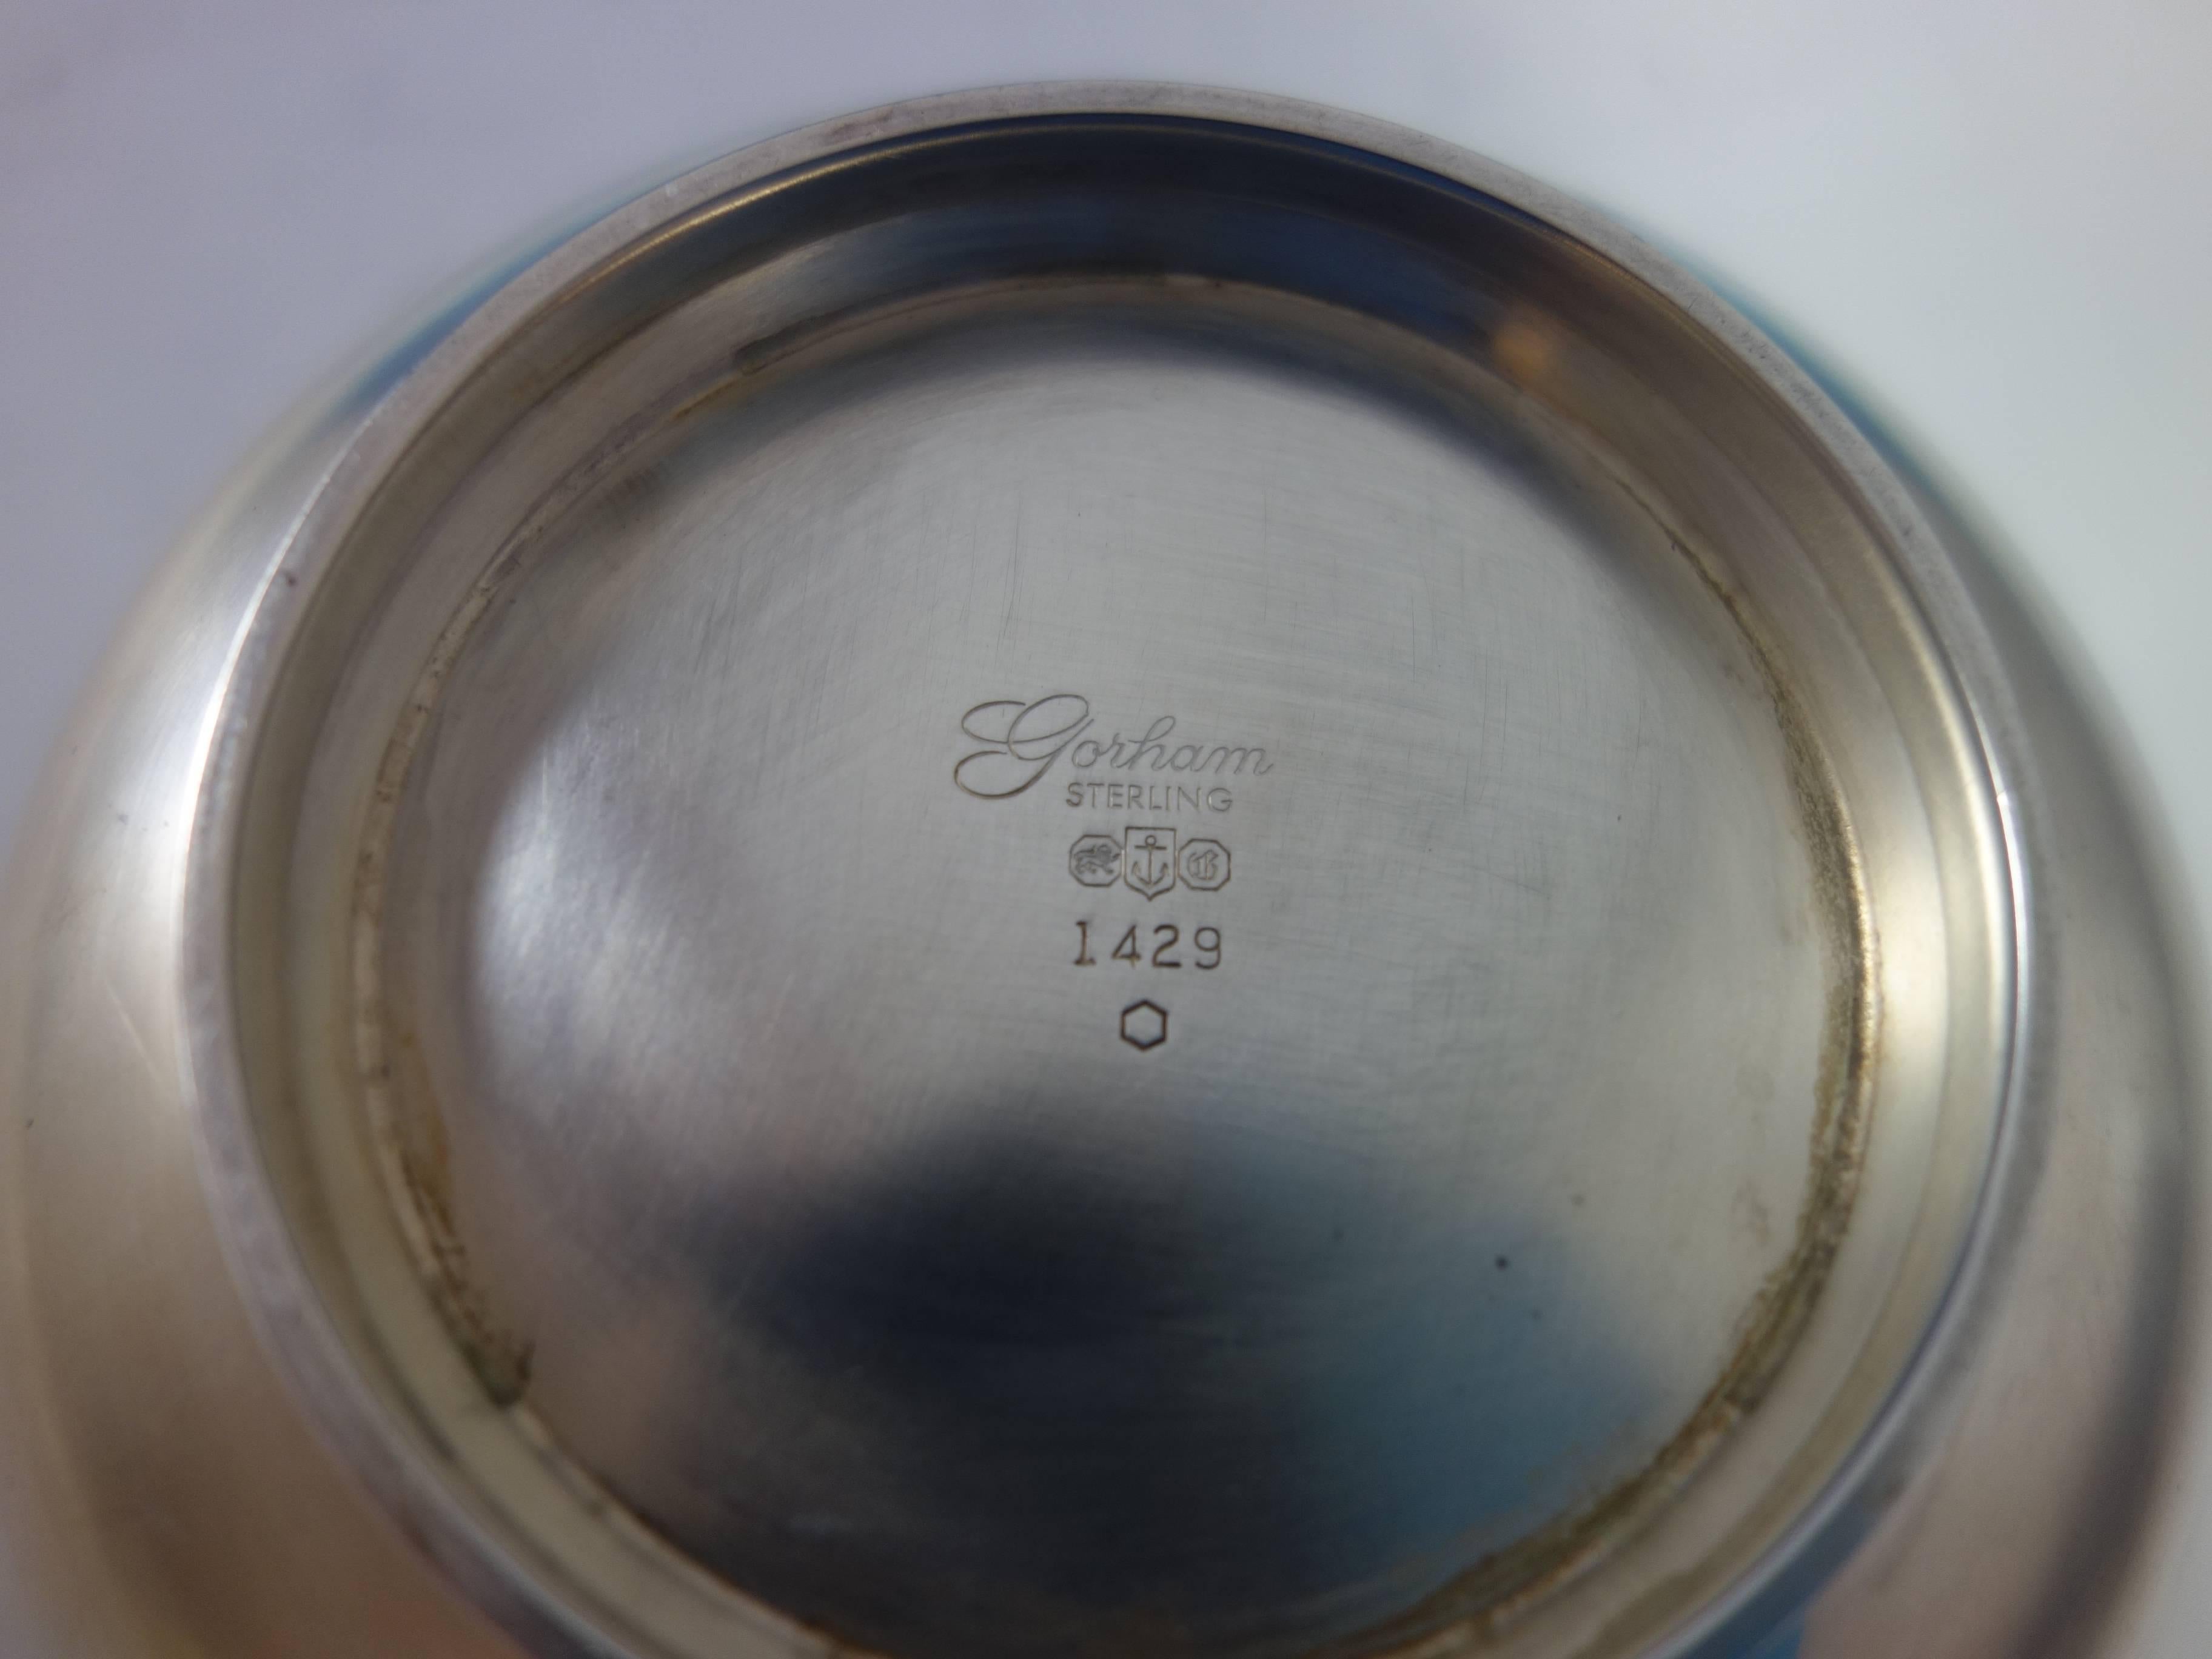 Esprit by Gorham Sterling Silver Bowl #1429 Hollowware SKU #2014 1